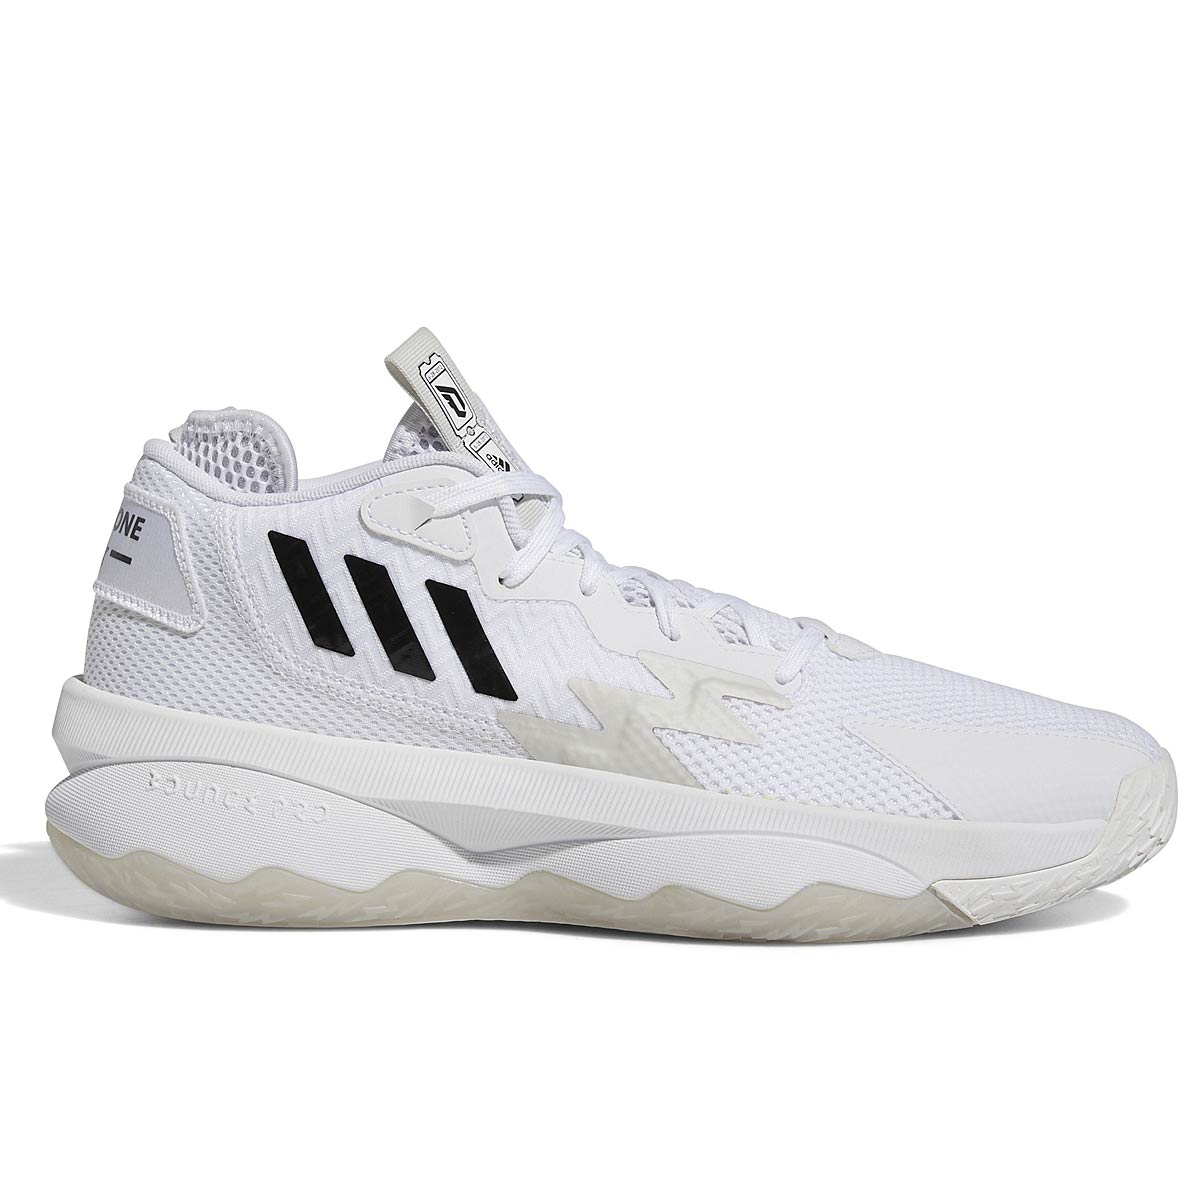 🏀 Get the DAME 8 basketball shoe - white | KICKZ